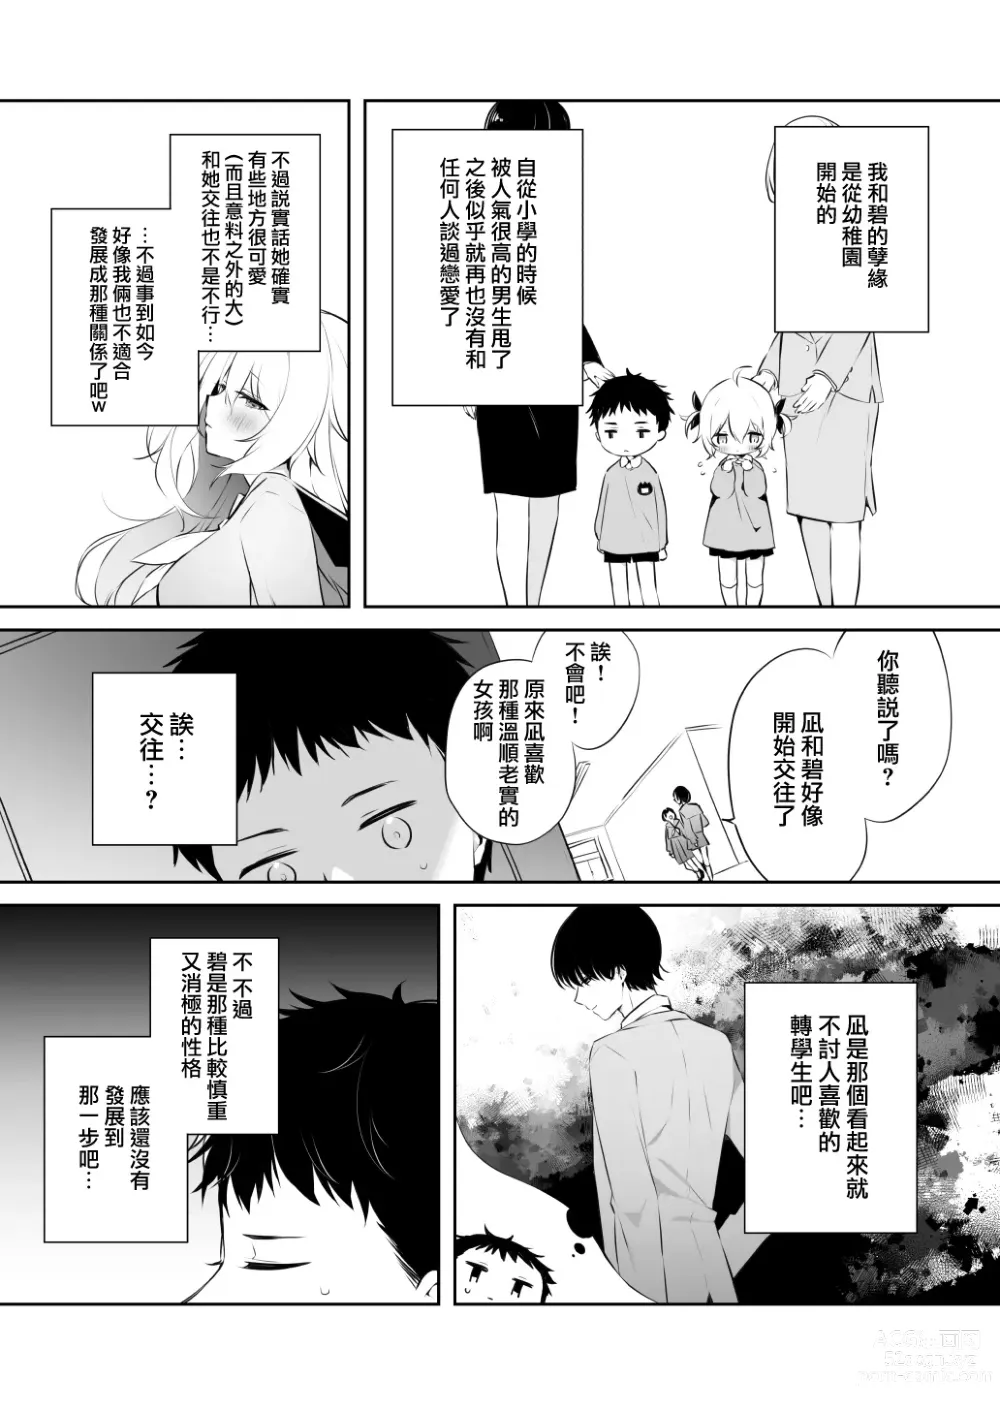 Page 4 of doujinshi 曾以为土里土气的青梅竹马绝对找不到男朋友